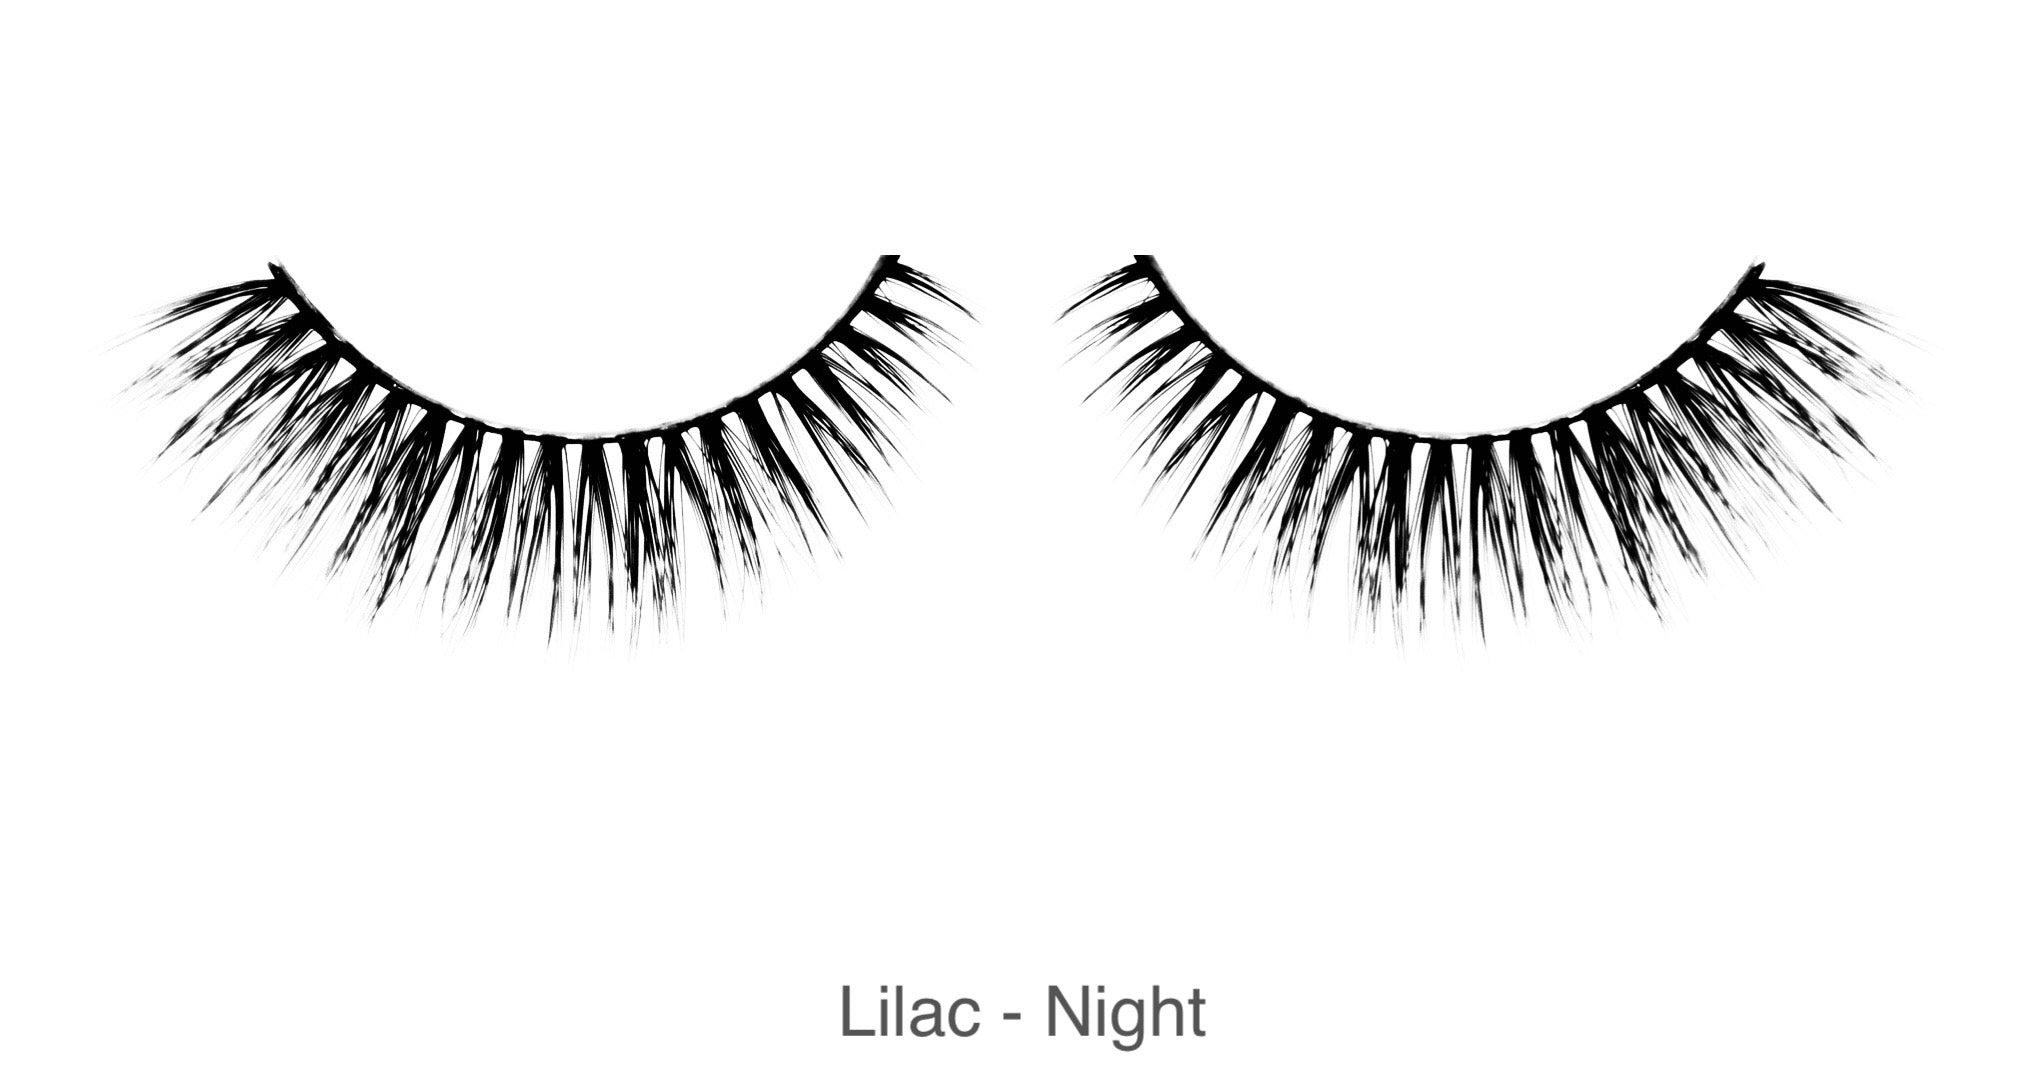 Lilac - Night